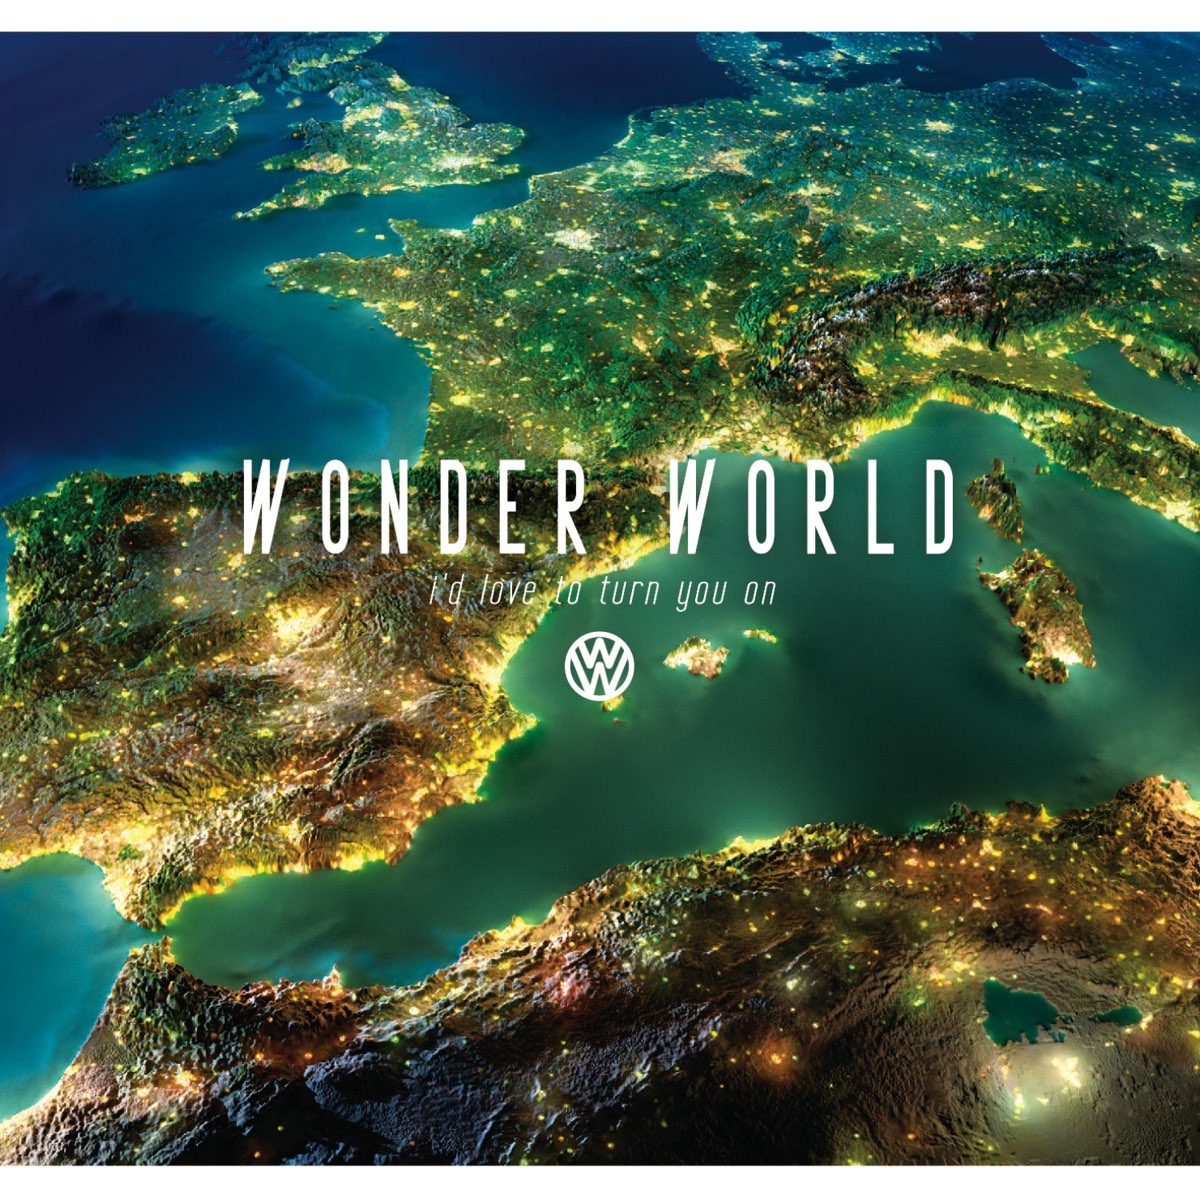 Wonder world 1. Wonders of the World.